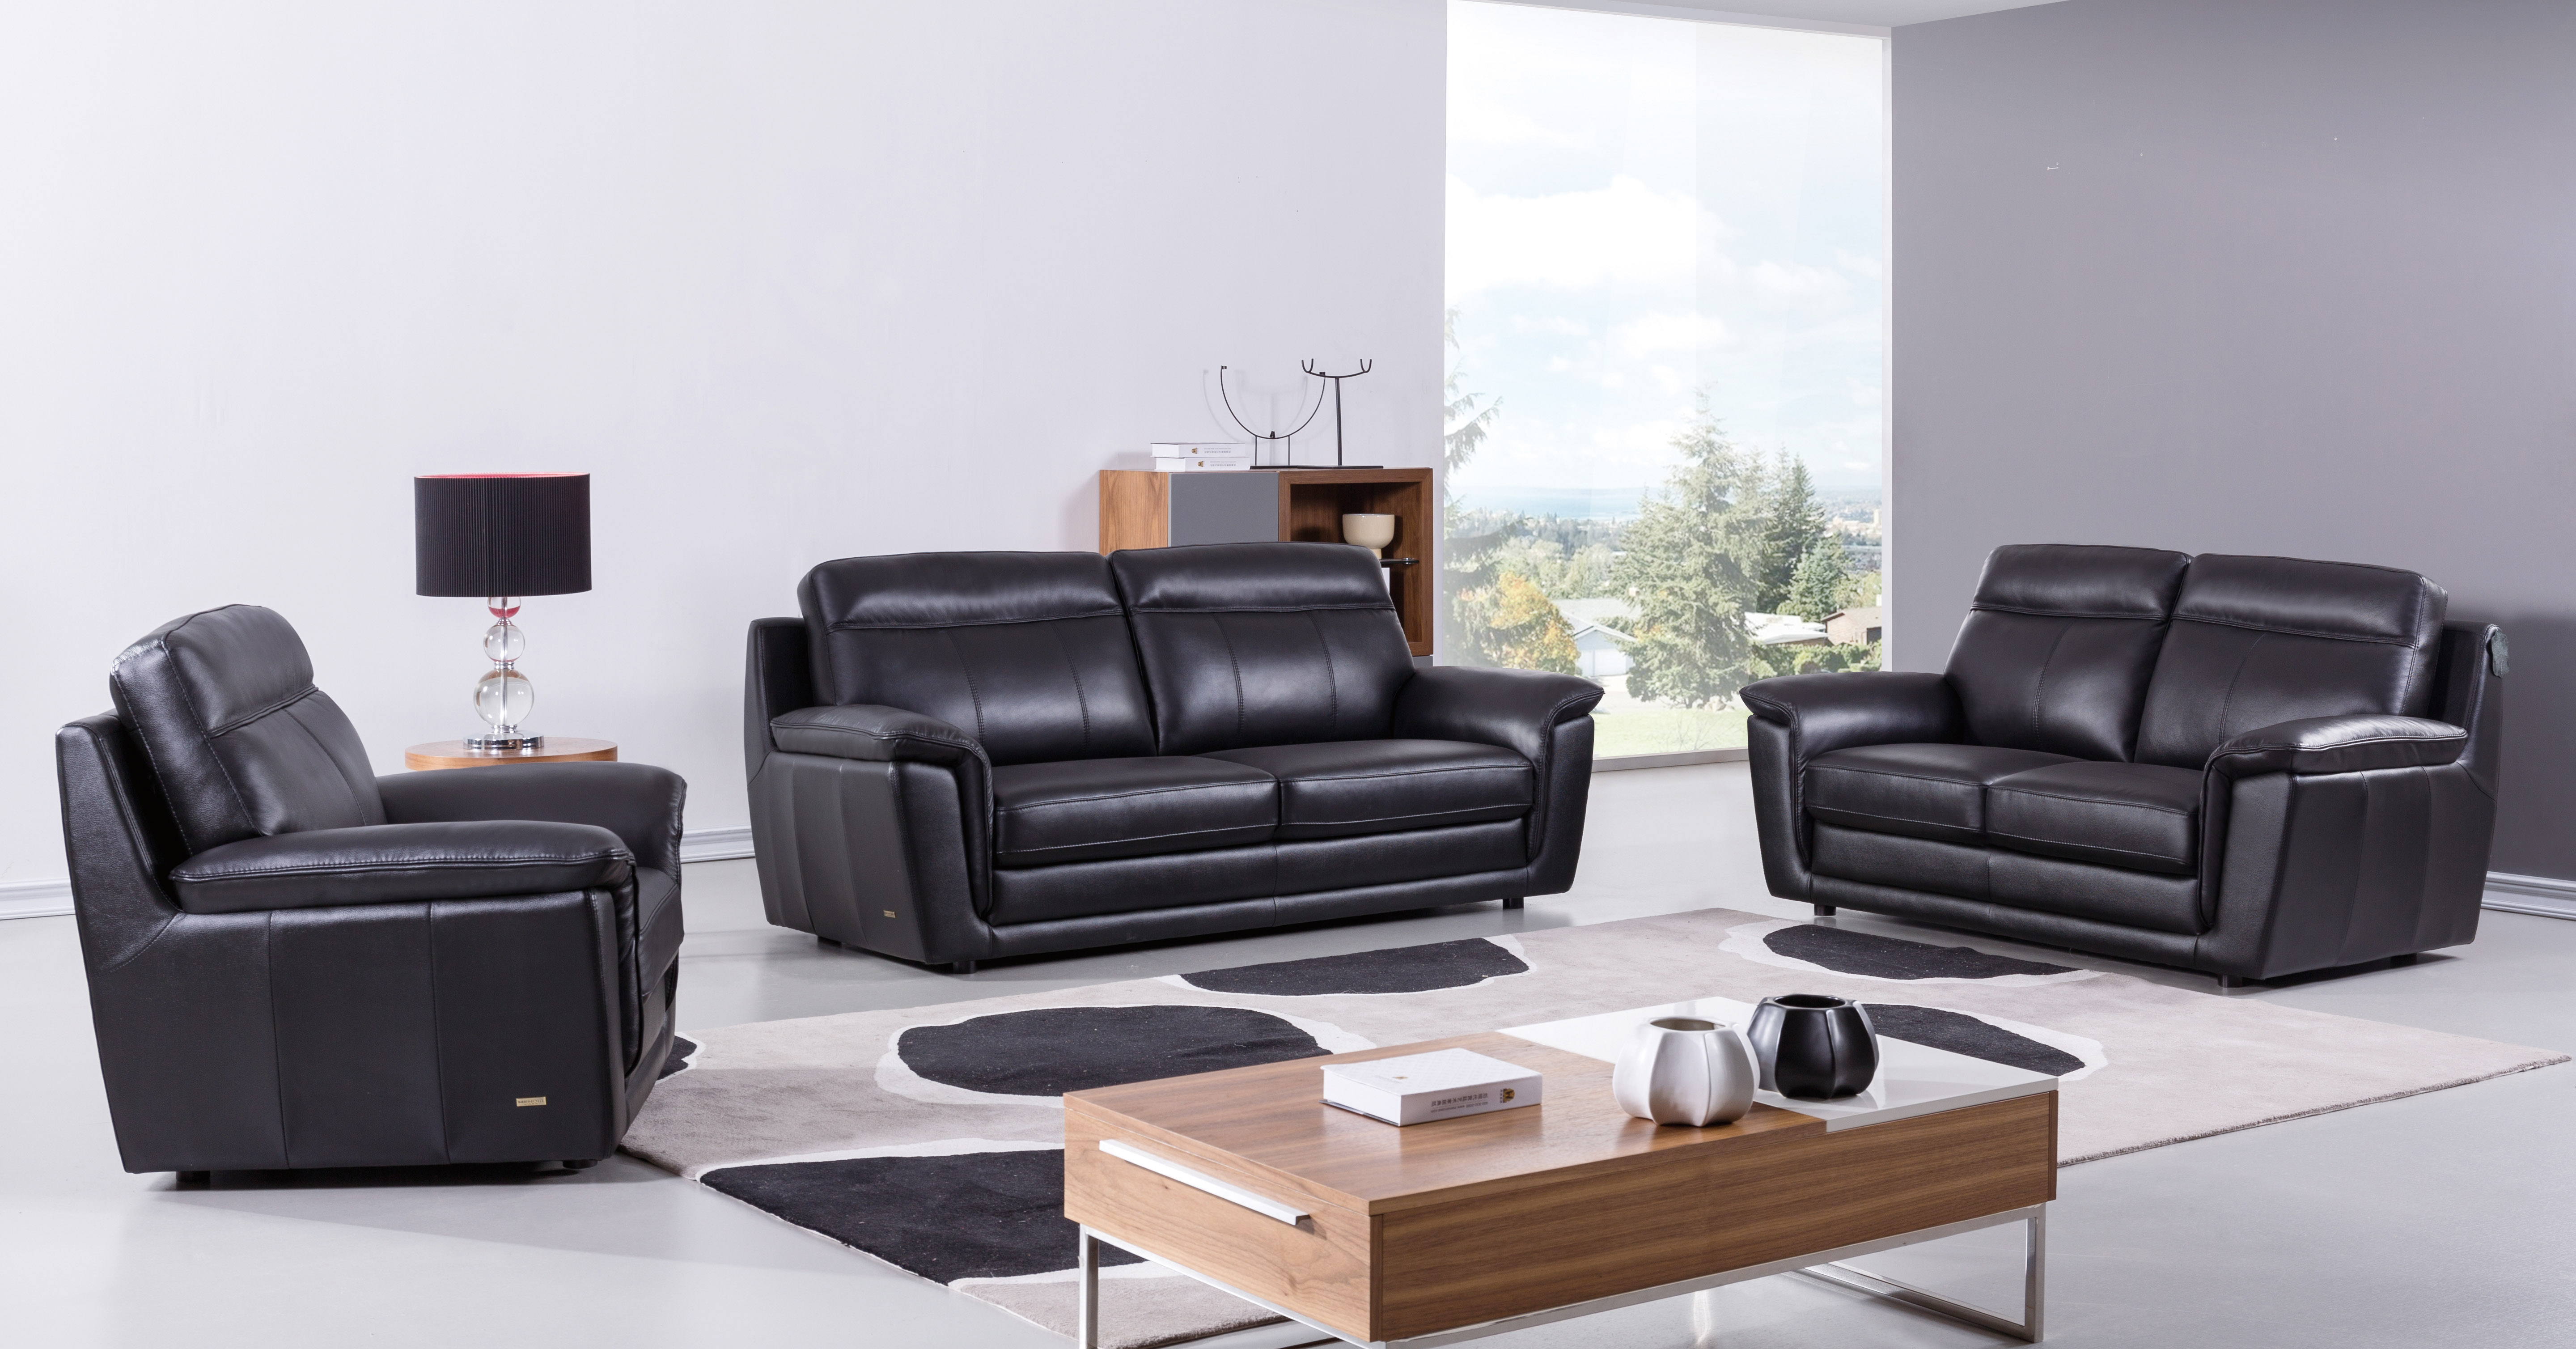 Contemporary Living Room Furniture Sets - Living Room Leather Set Sofa ...